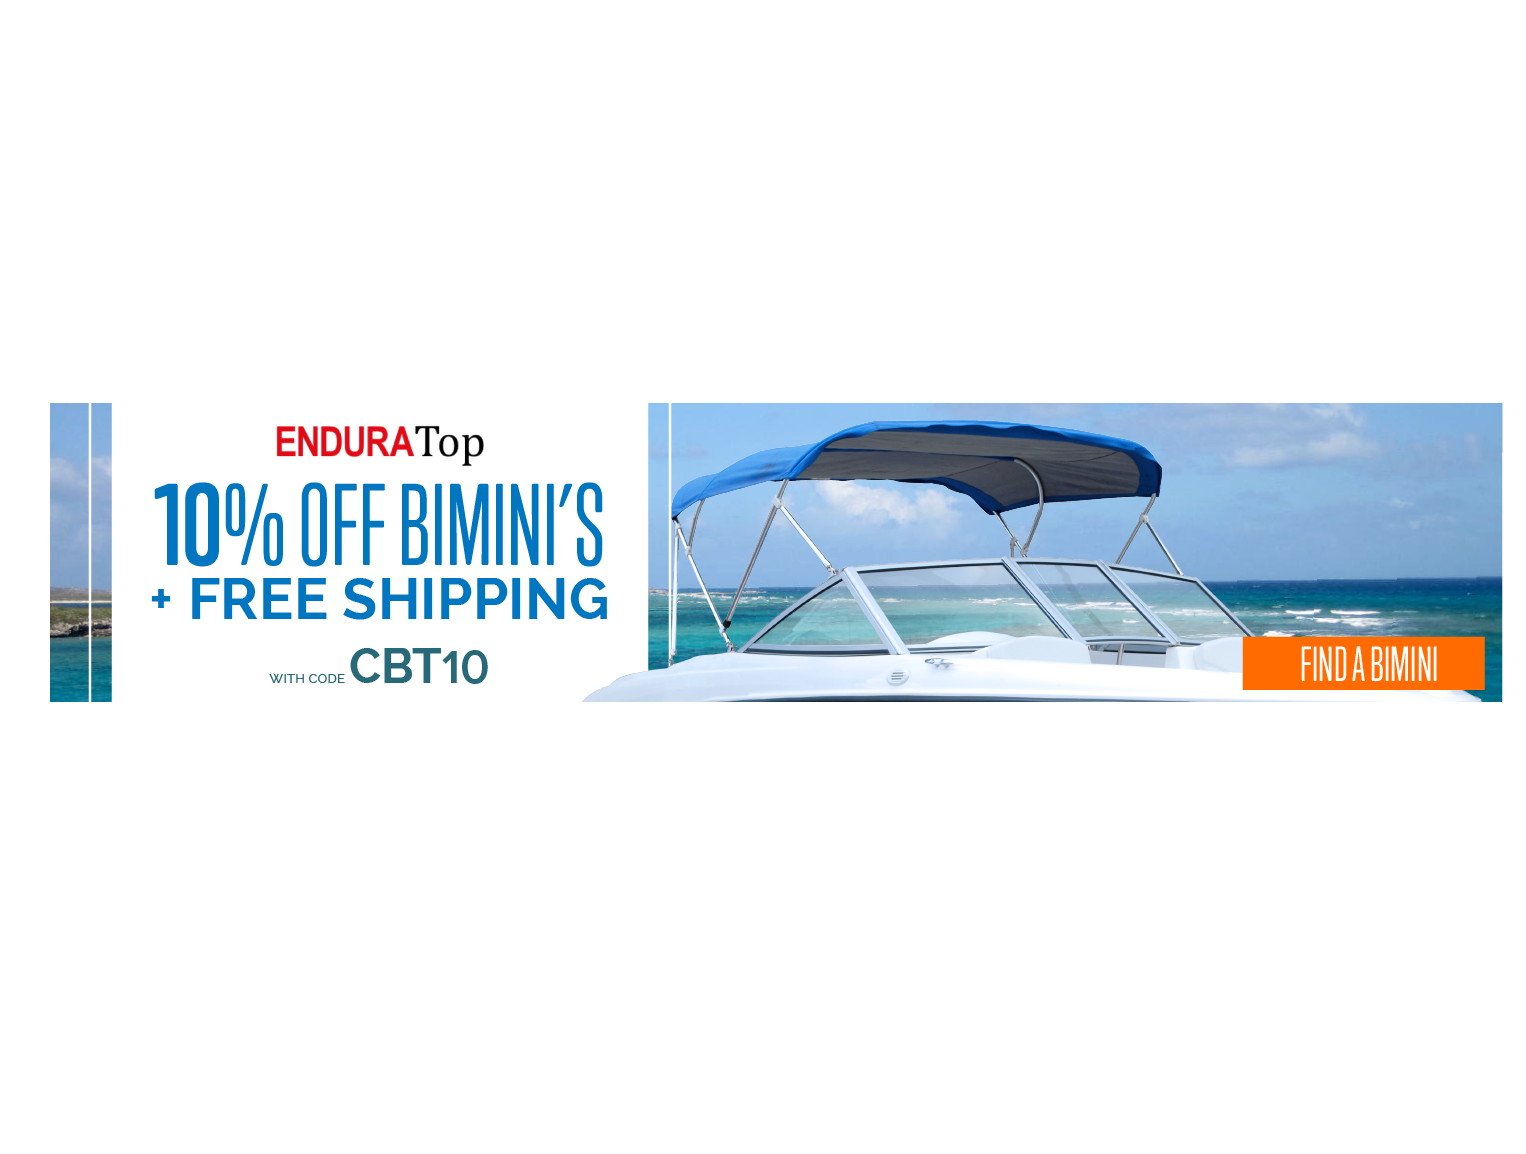 EnduraTop Bimini sale April, 10% off